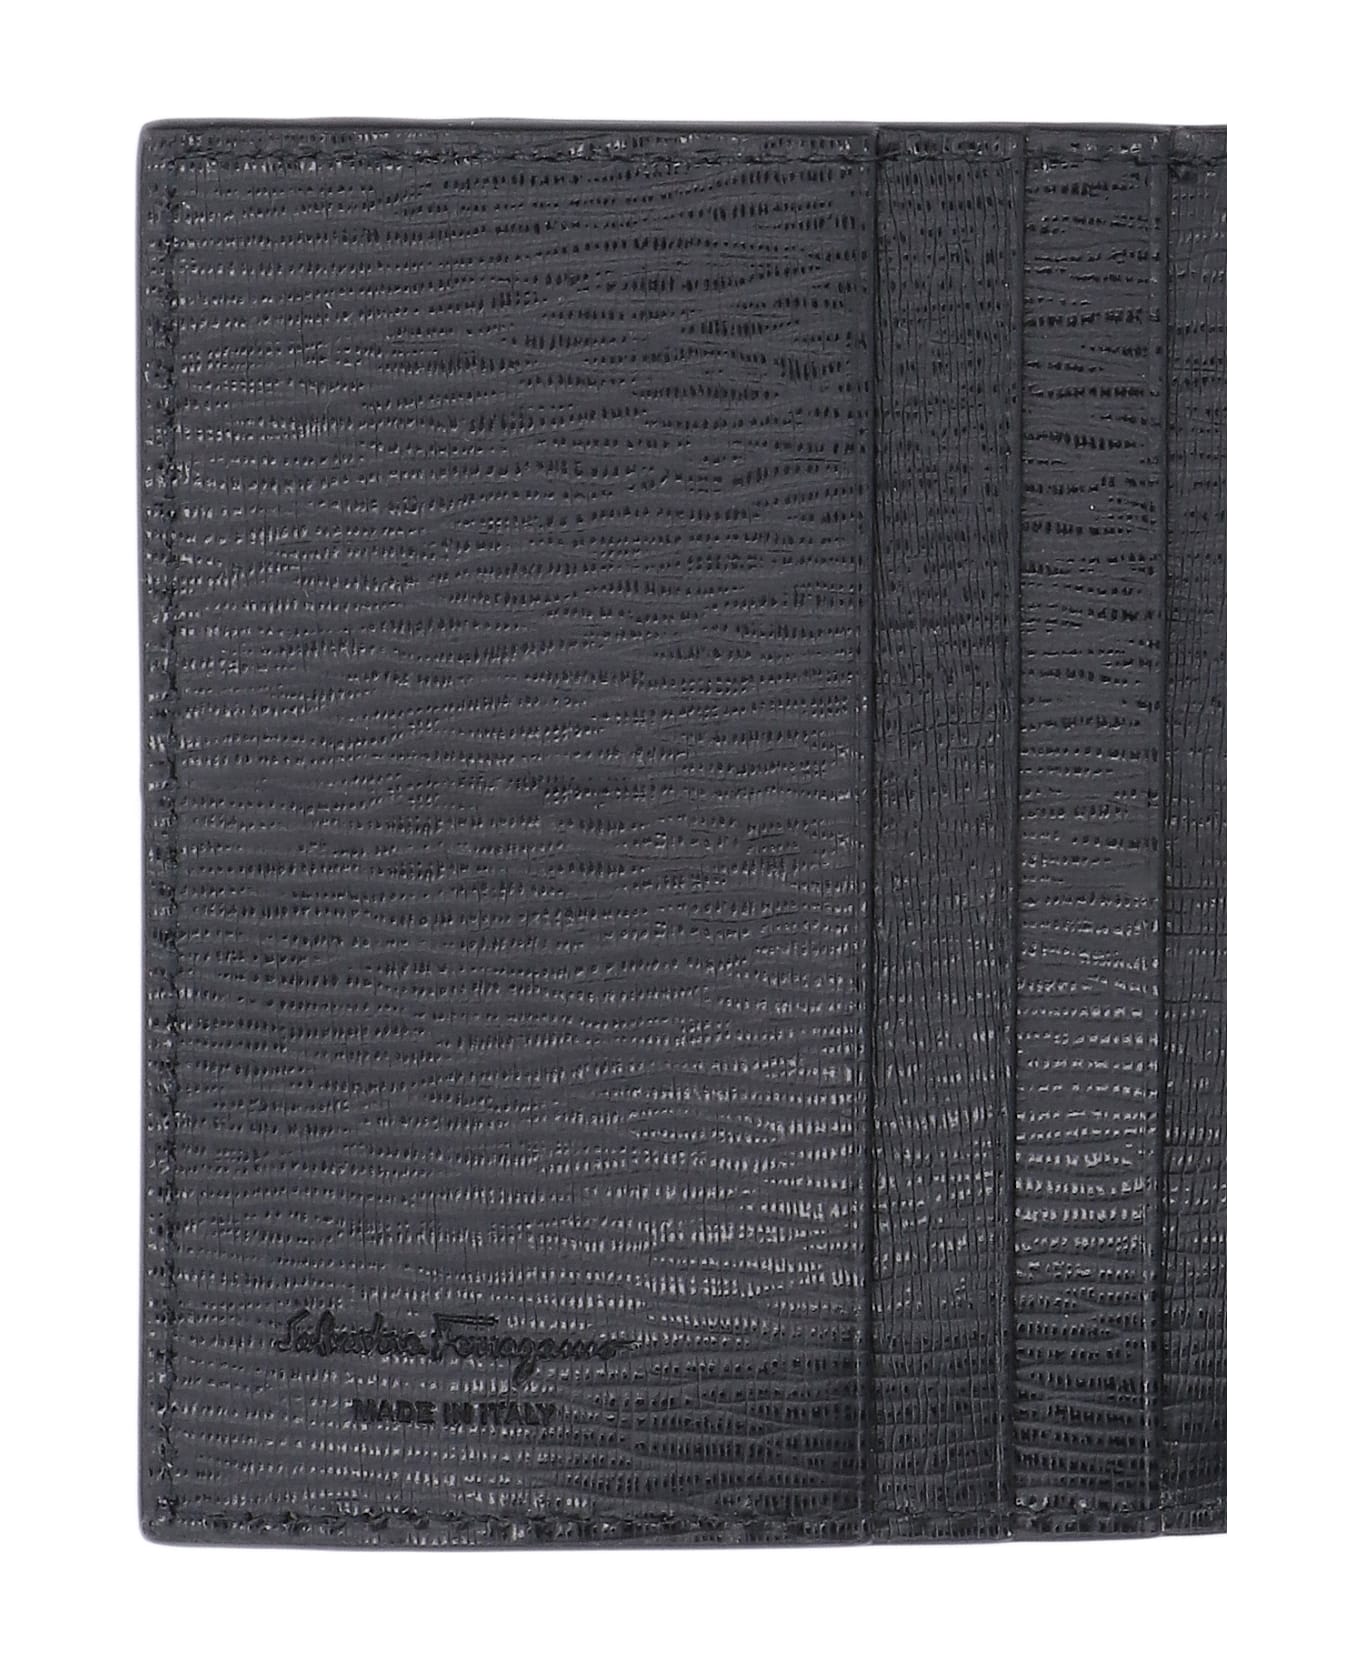 Ferragamo Gancini Bi-fold Wallet - Black  